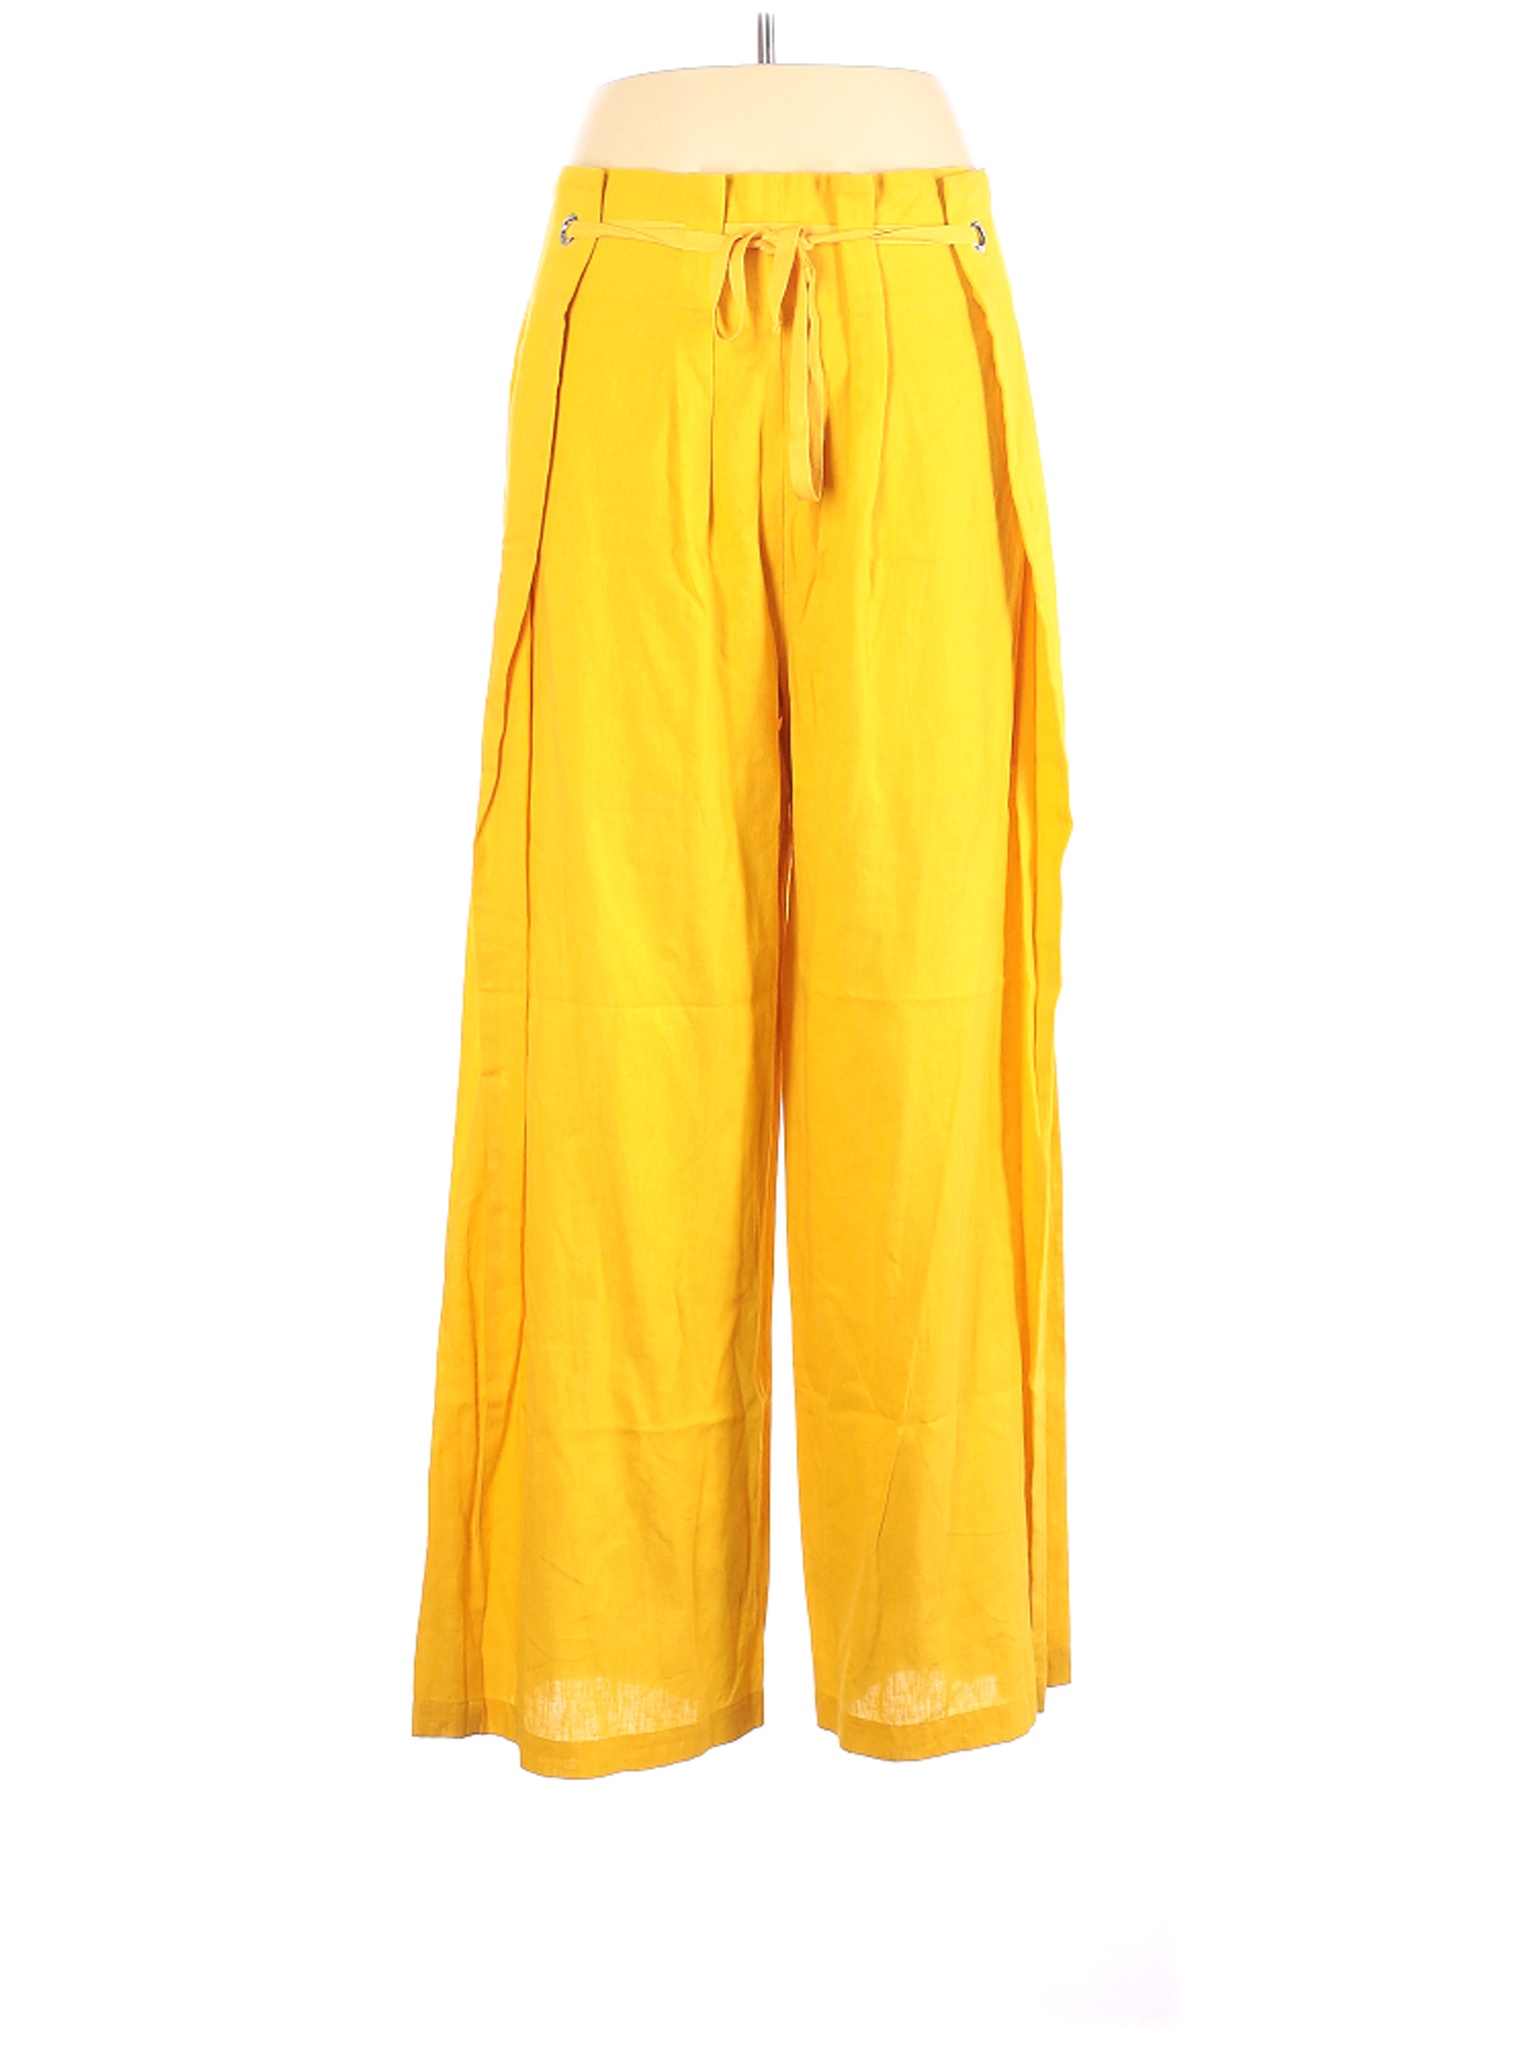 NWT BCBGMAXAZRIA Women Yellow Linen Pants L | eBay